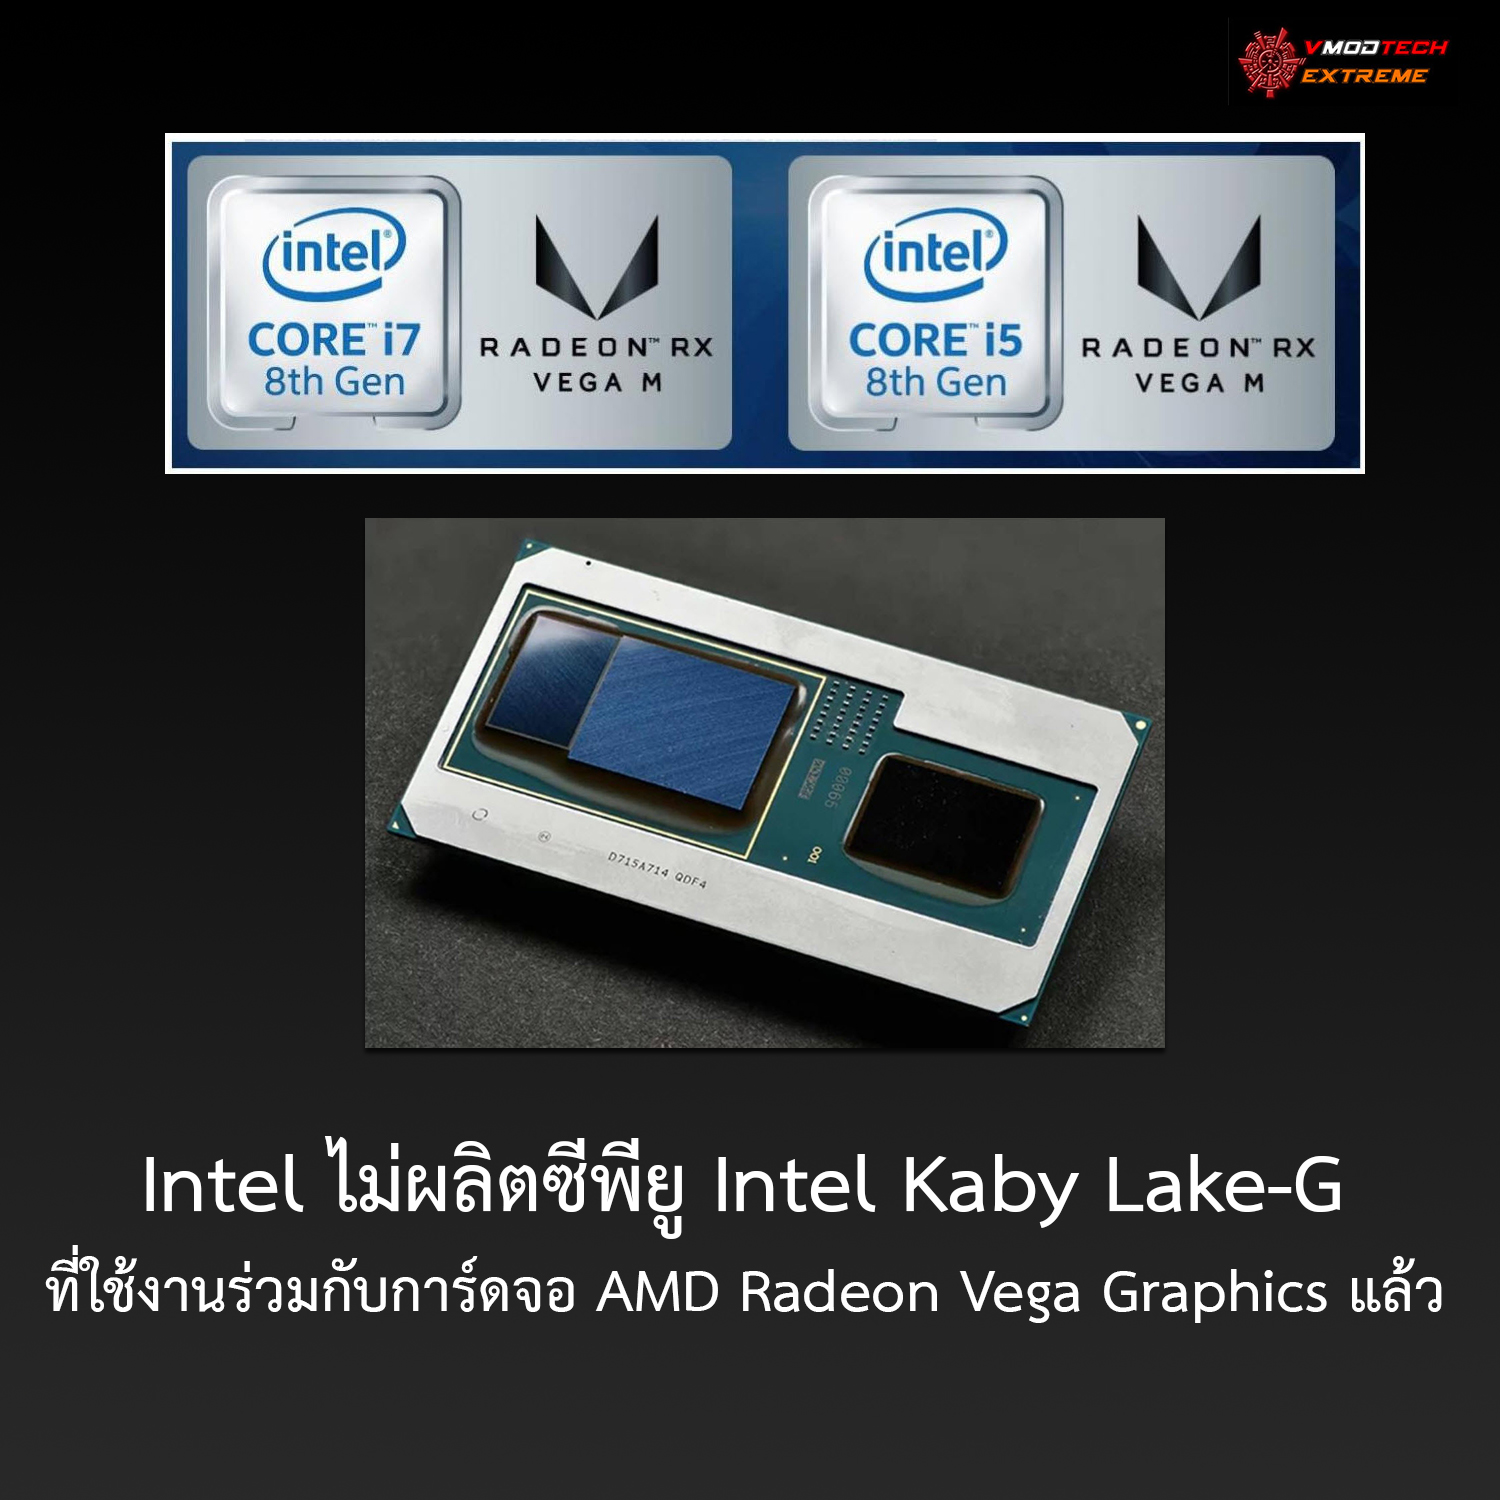 Intel ไม่ผลิตซีพียู Intel Kaby Lake-G ที่ใช้งานร่วมกับการ์ดจอ AMD Radeon Vega Graphics แล้ว